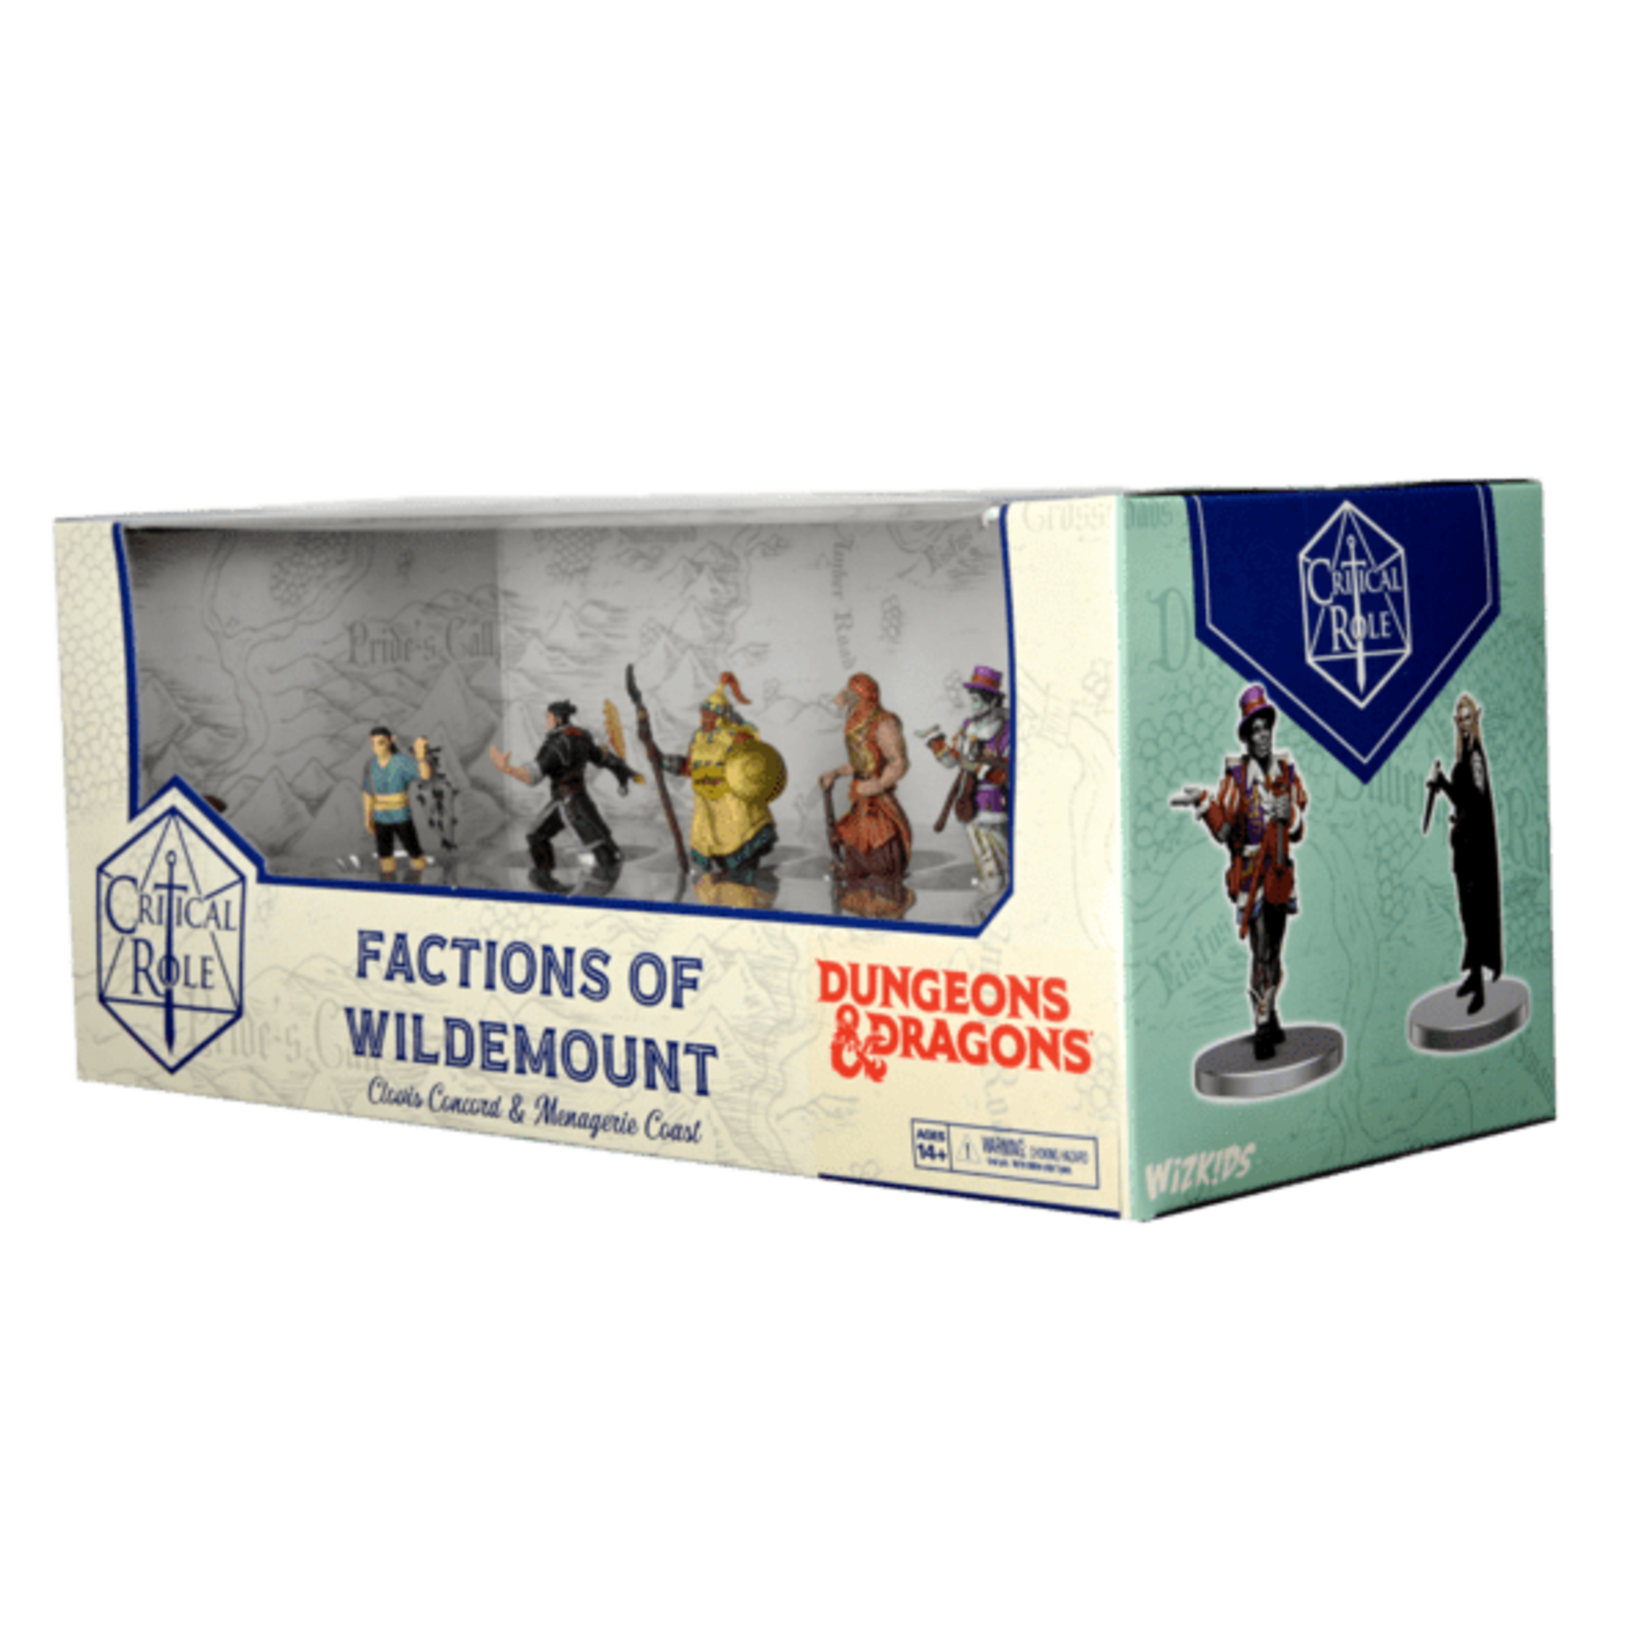 Wizkids Wizkids Critical Role: Factions of Wildemount: Clovis Concord & Menagerie Coast (9) Set